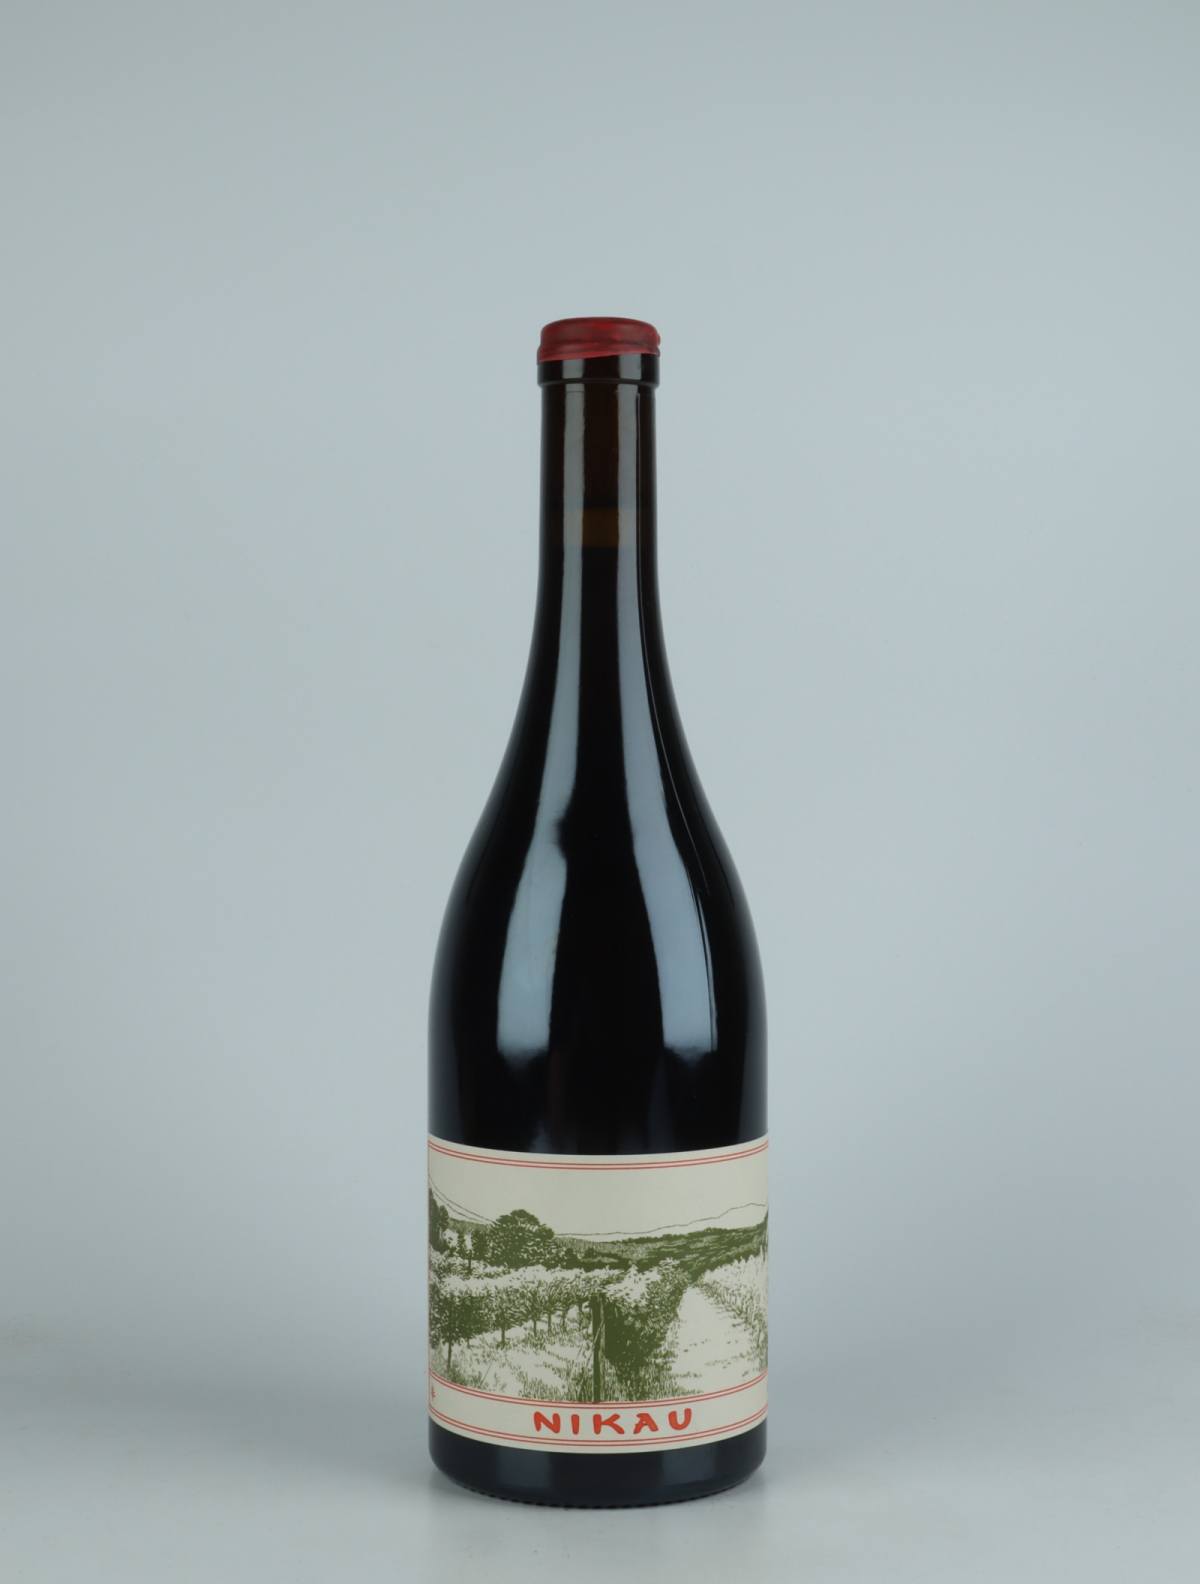 A bottle 2020 Tonimbuk Pinot Noir Red wine from Nikau Farm, Victoria in Australia